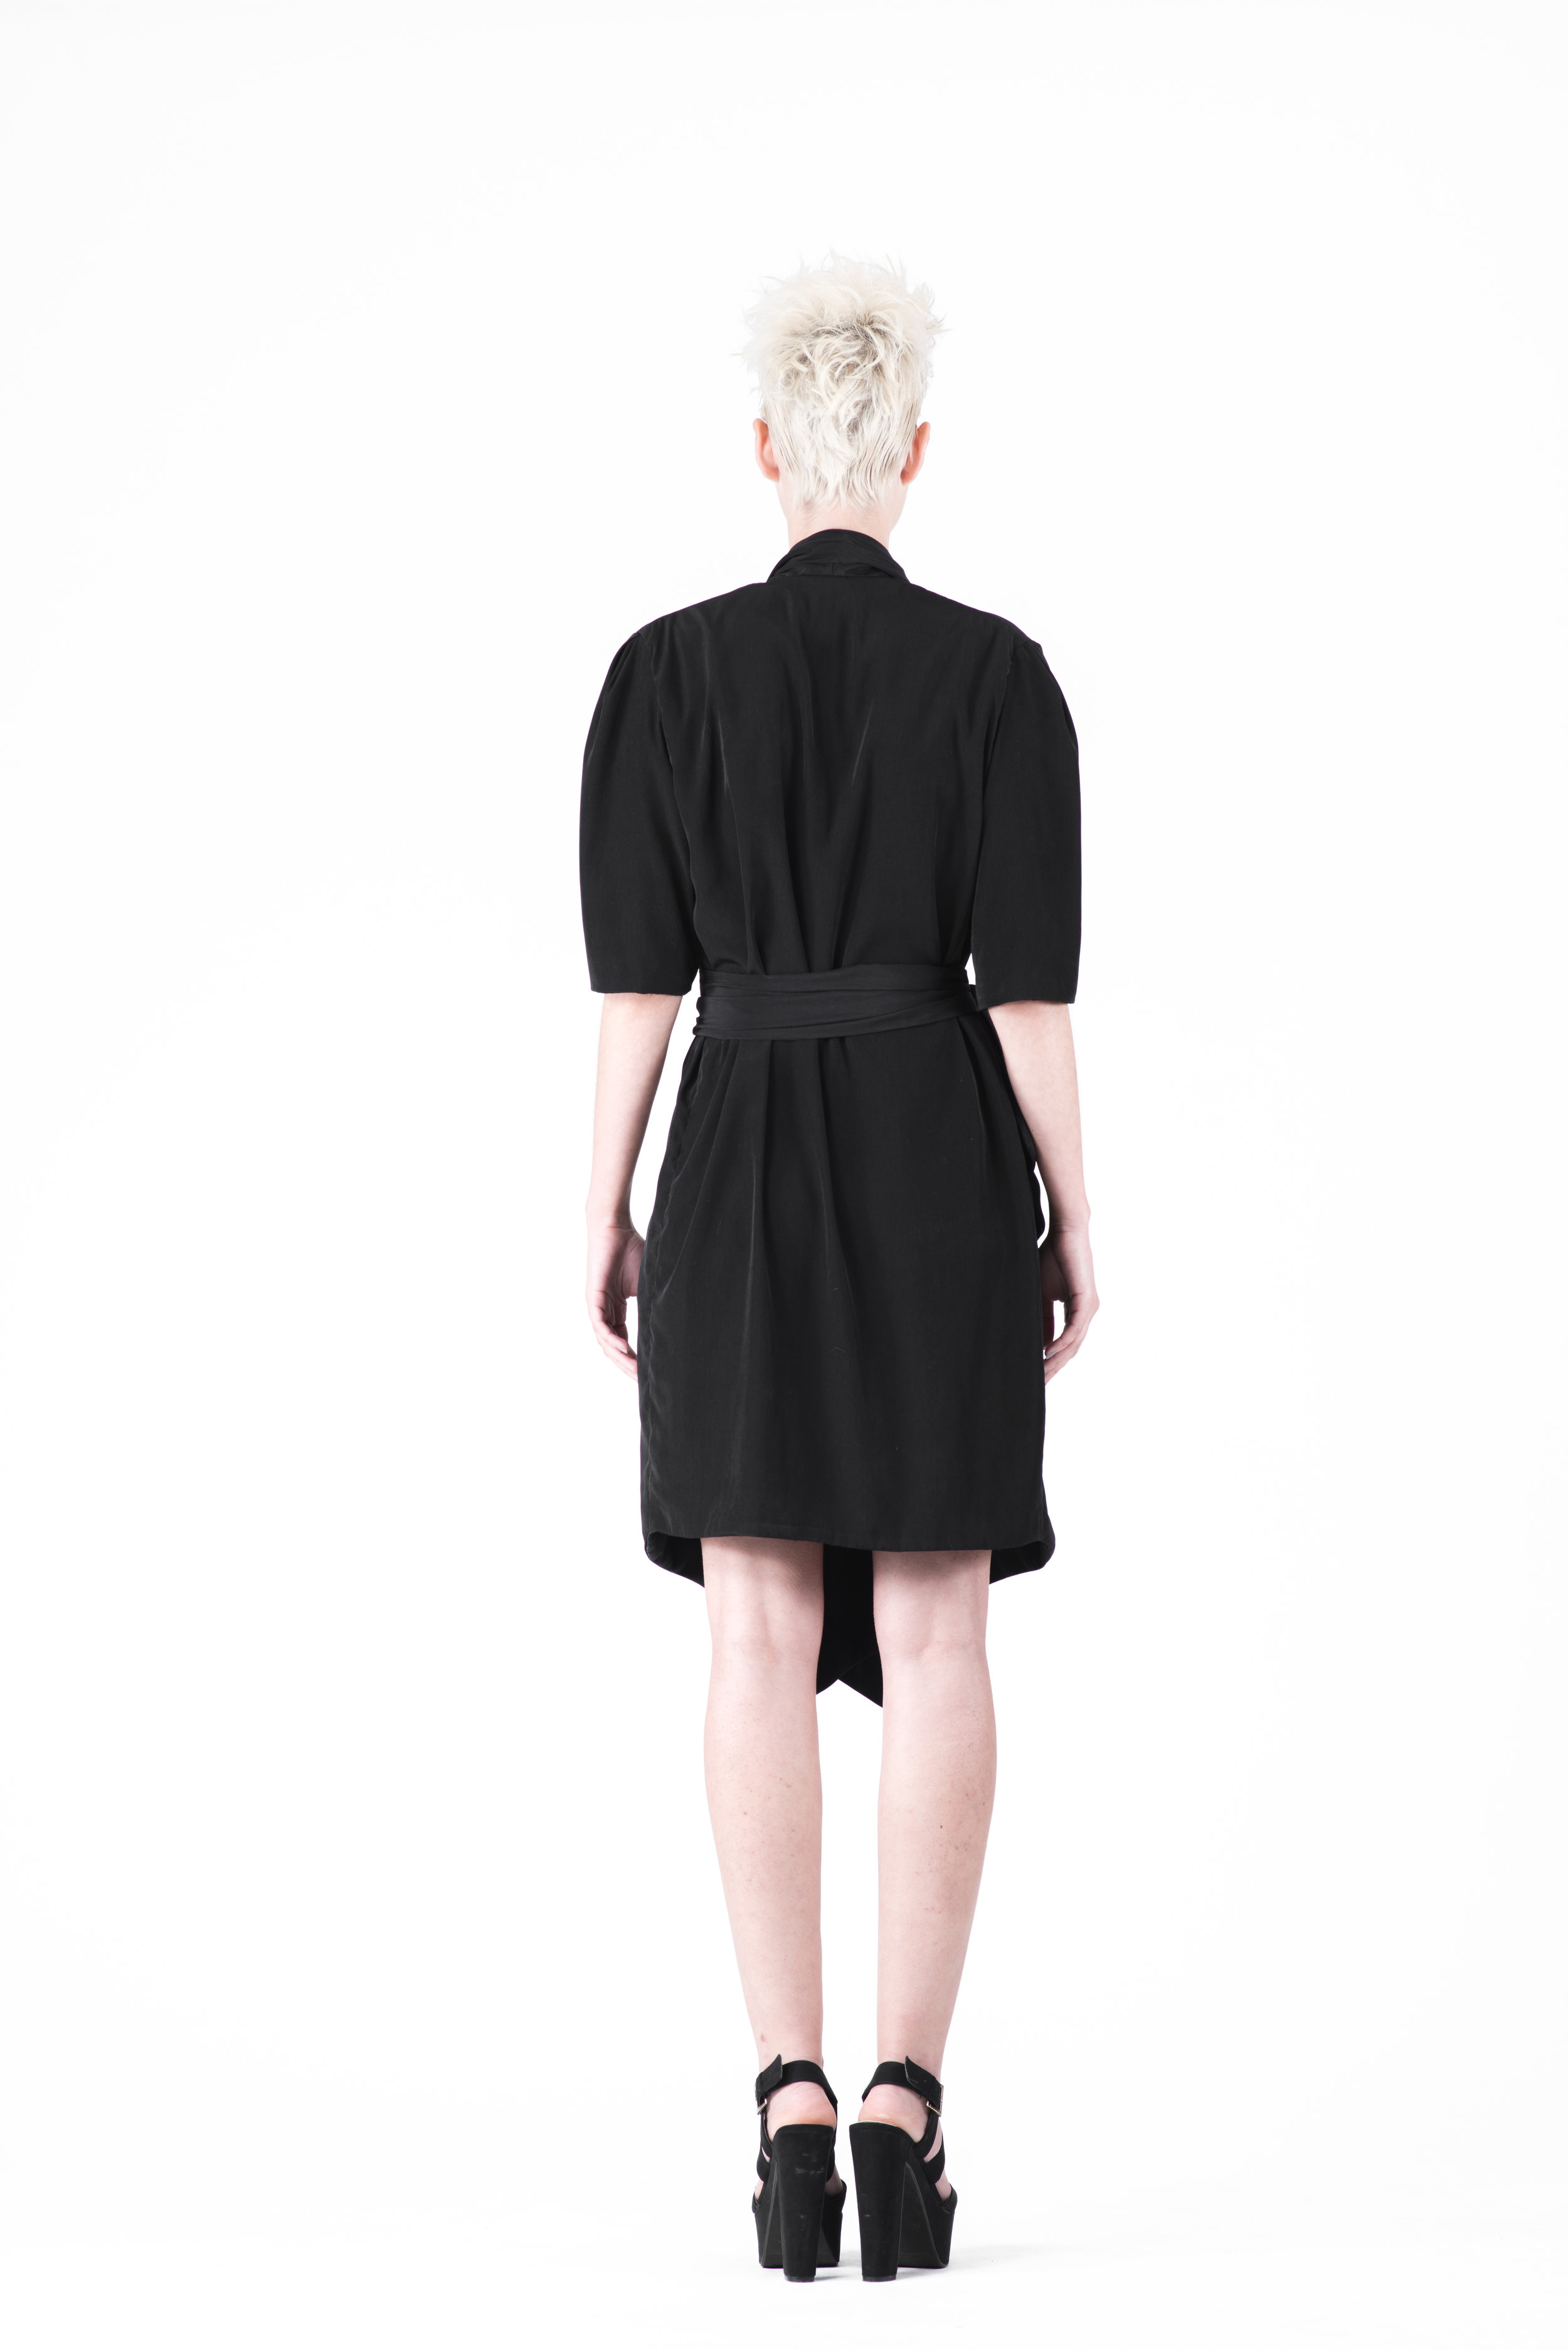 zaramia-ava-zaramiaava-leeds-fashion-designer-ethical-sustainable-tailored-minimalist-maika-dress-obi-belt-black-versatile-drape-cowl-styling-womenswear-models-photoshoot-42